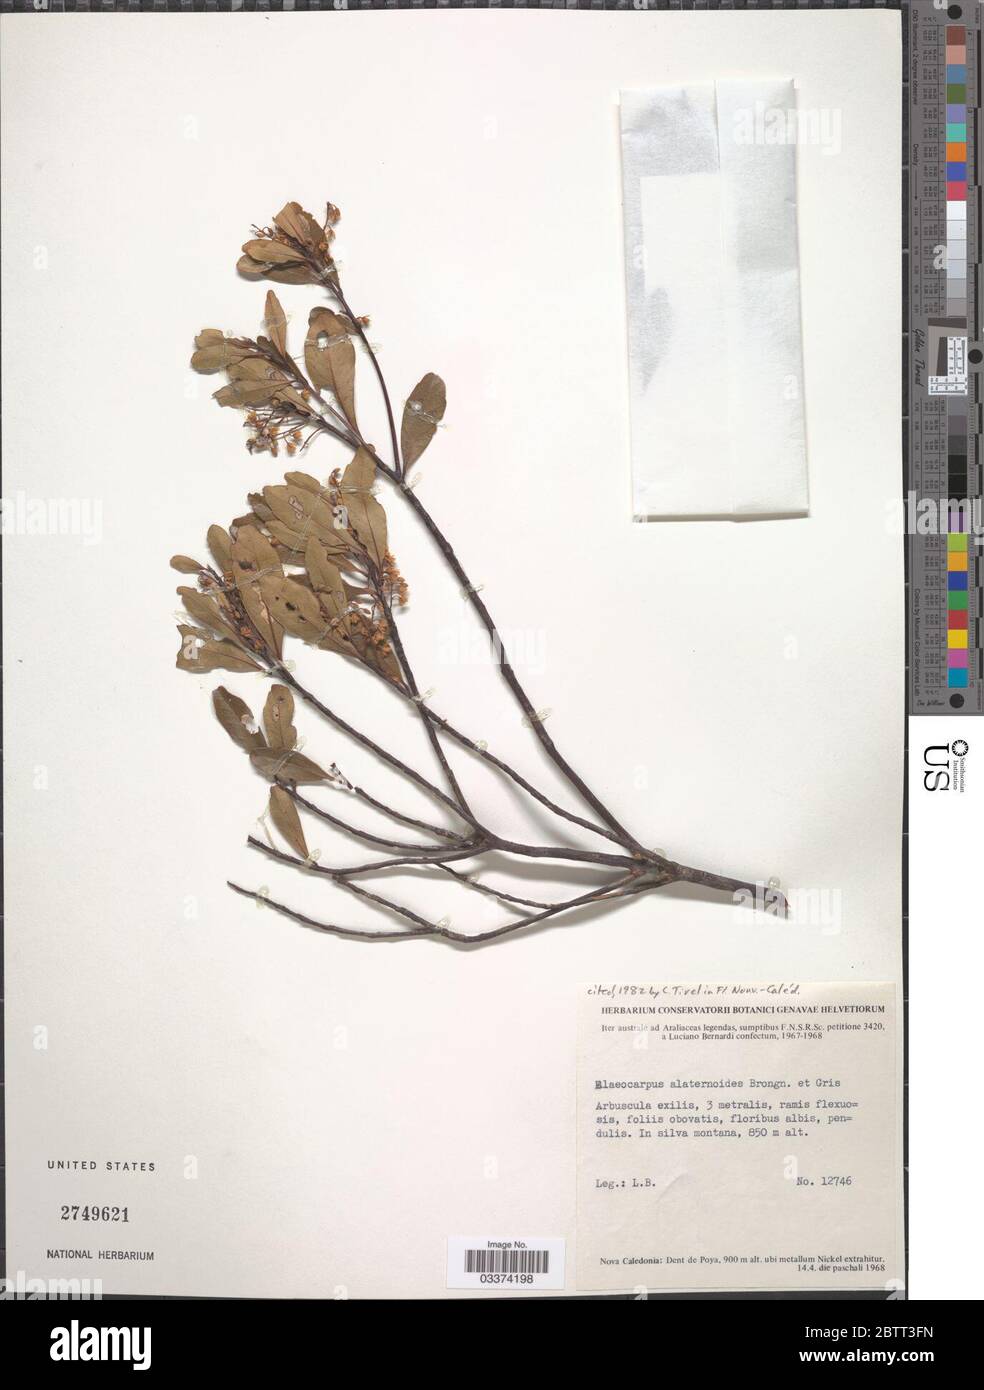 Elaeocarpus alaternoides Brongn Gris. Stock Photo